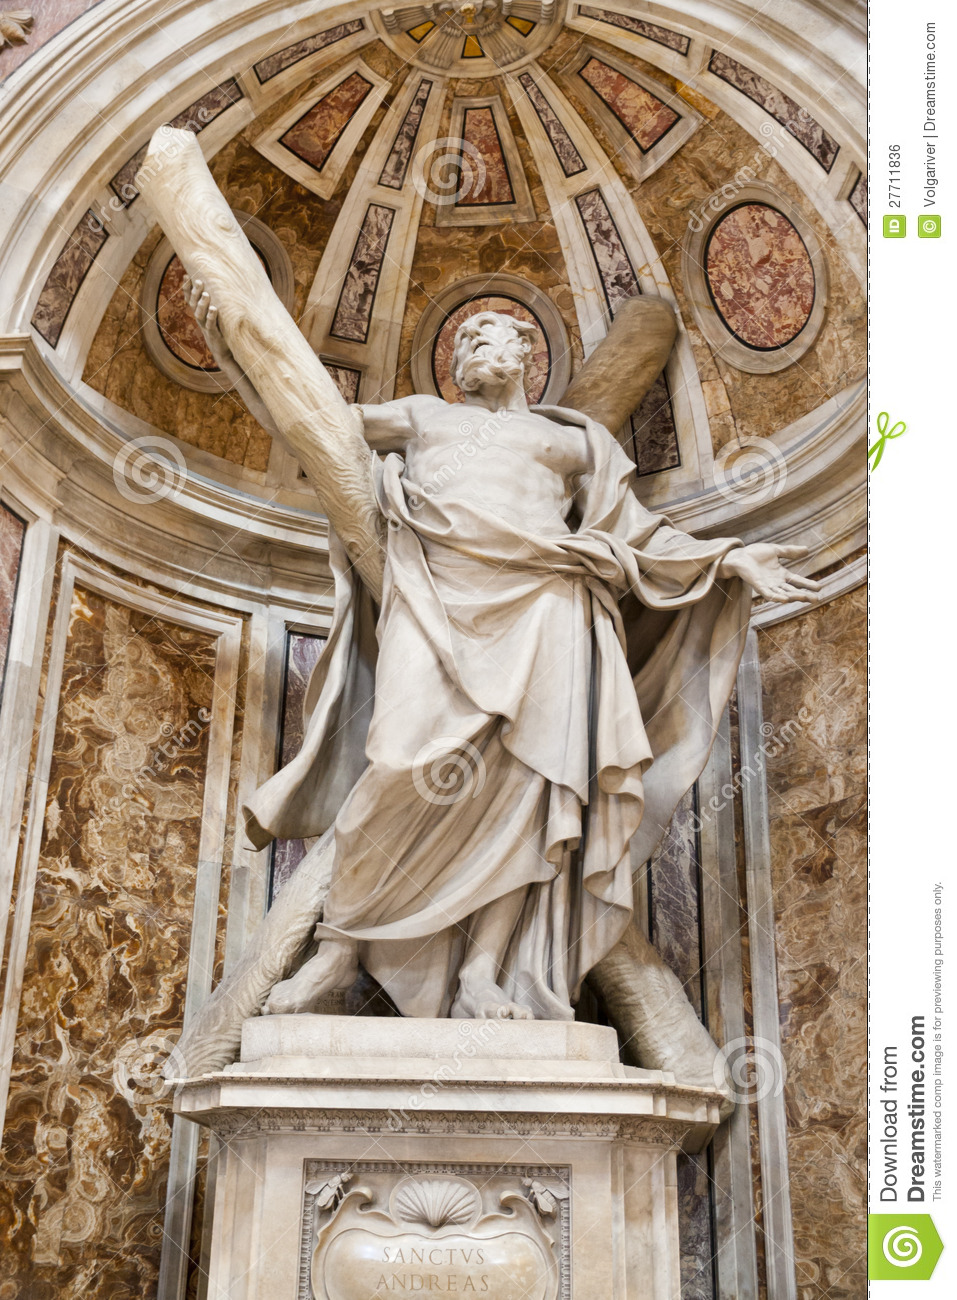 saint-andrew-statue-basilica-vatican-27711836.jpg